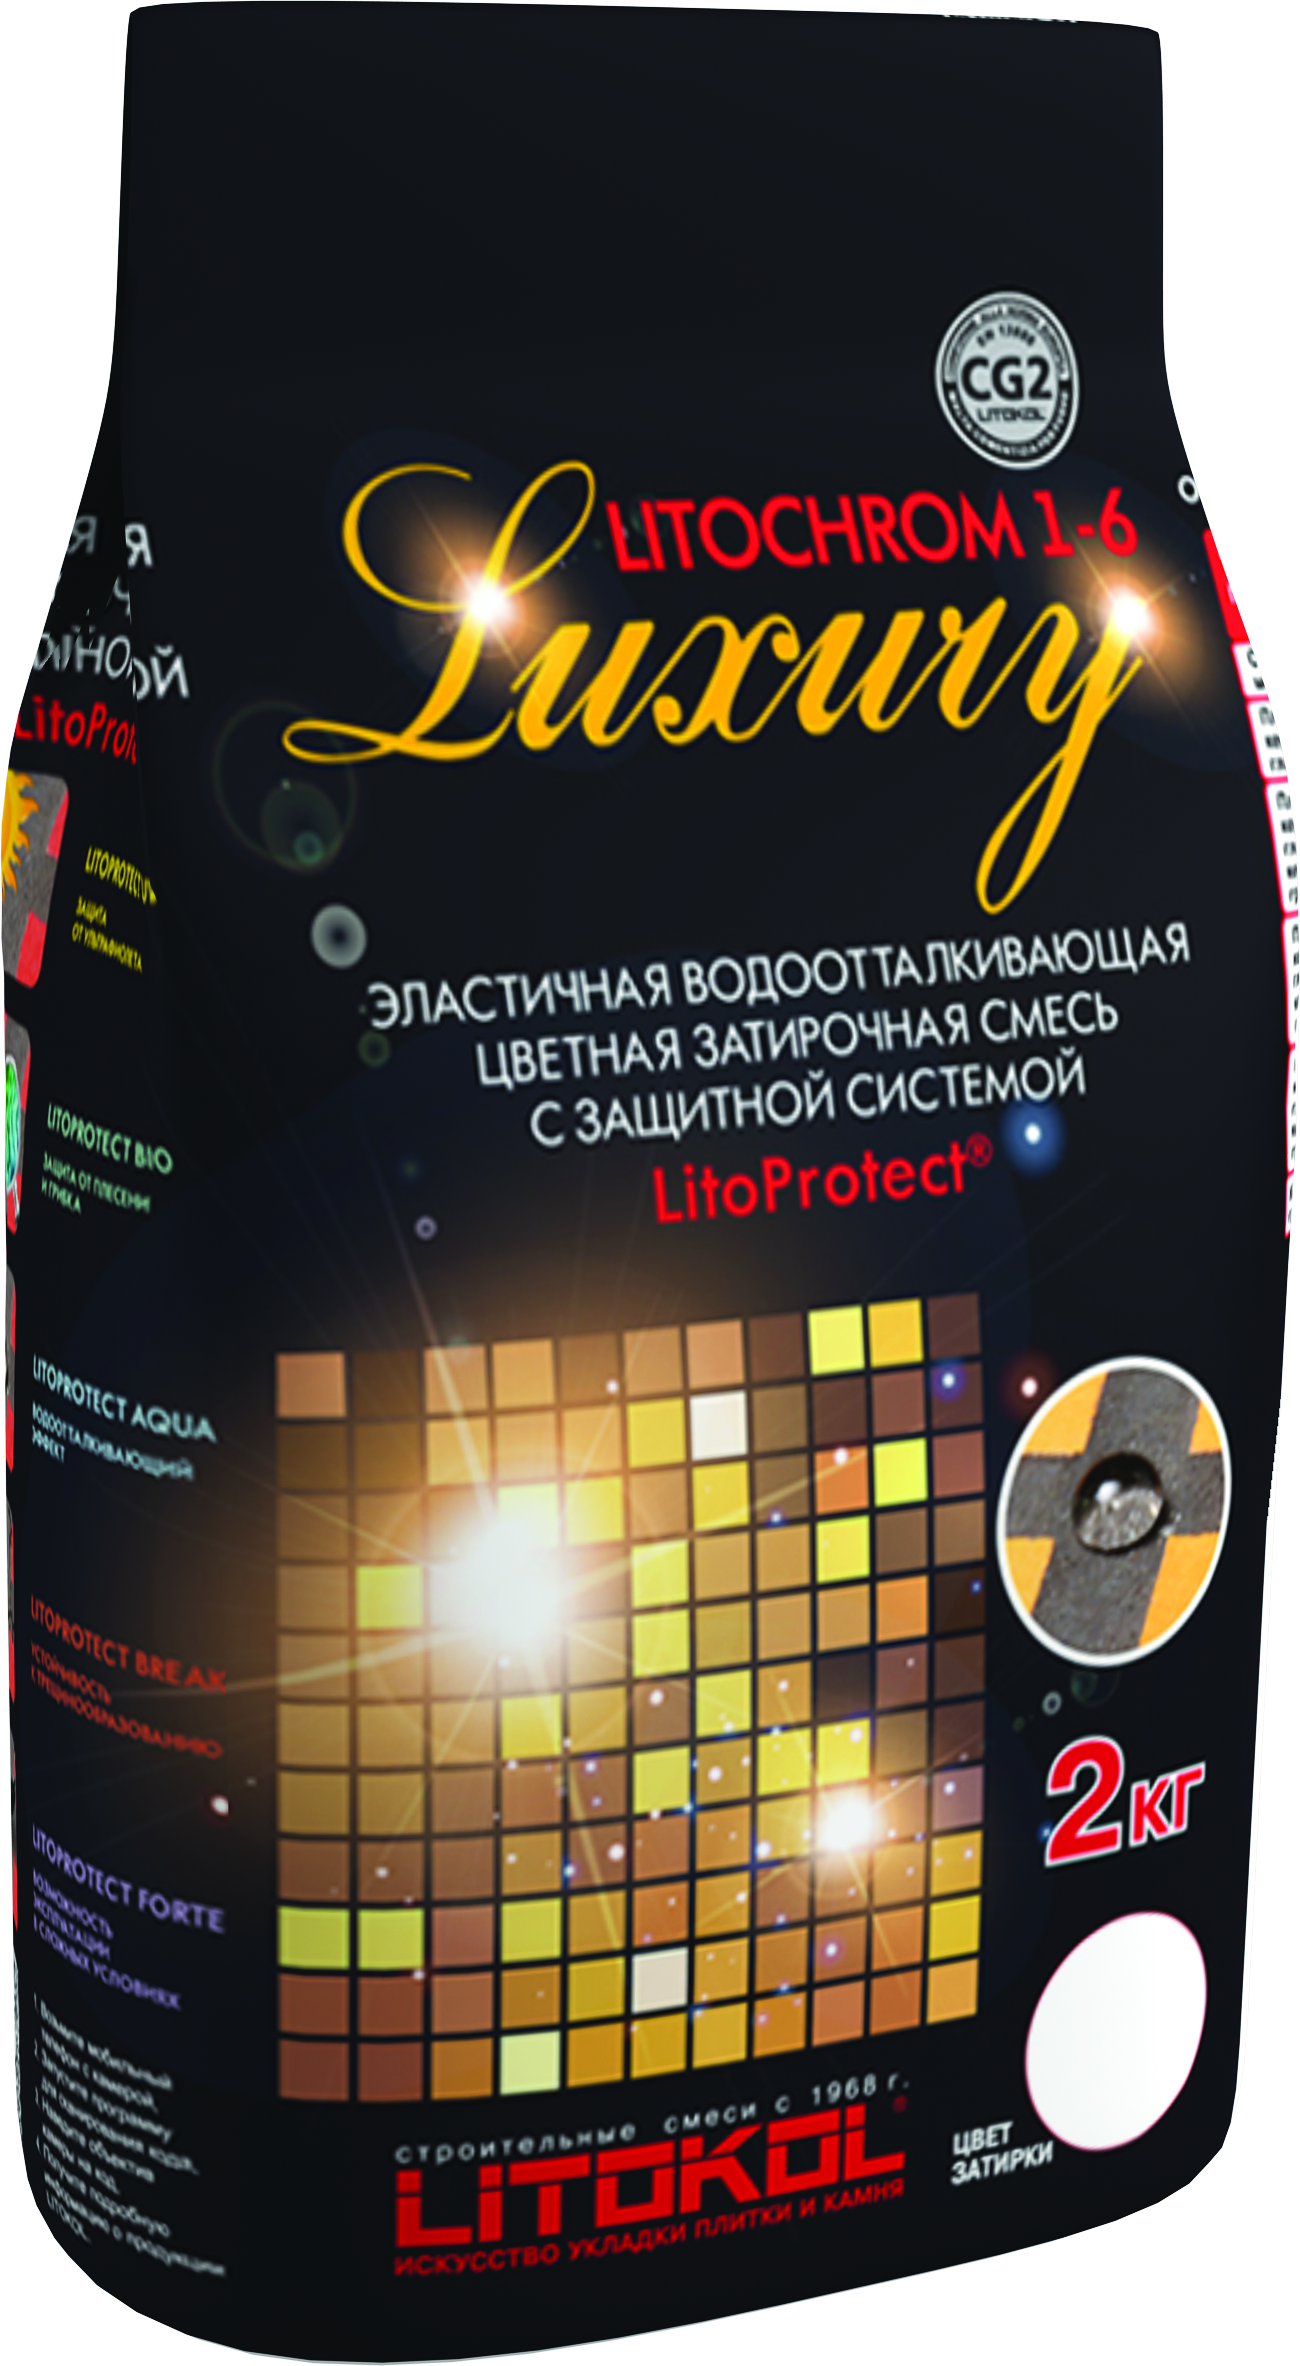 Купить Litokol Litochrom 1-6 Luxury C.40, 2 кг